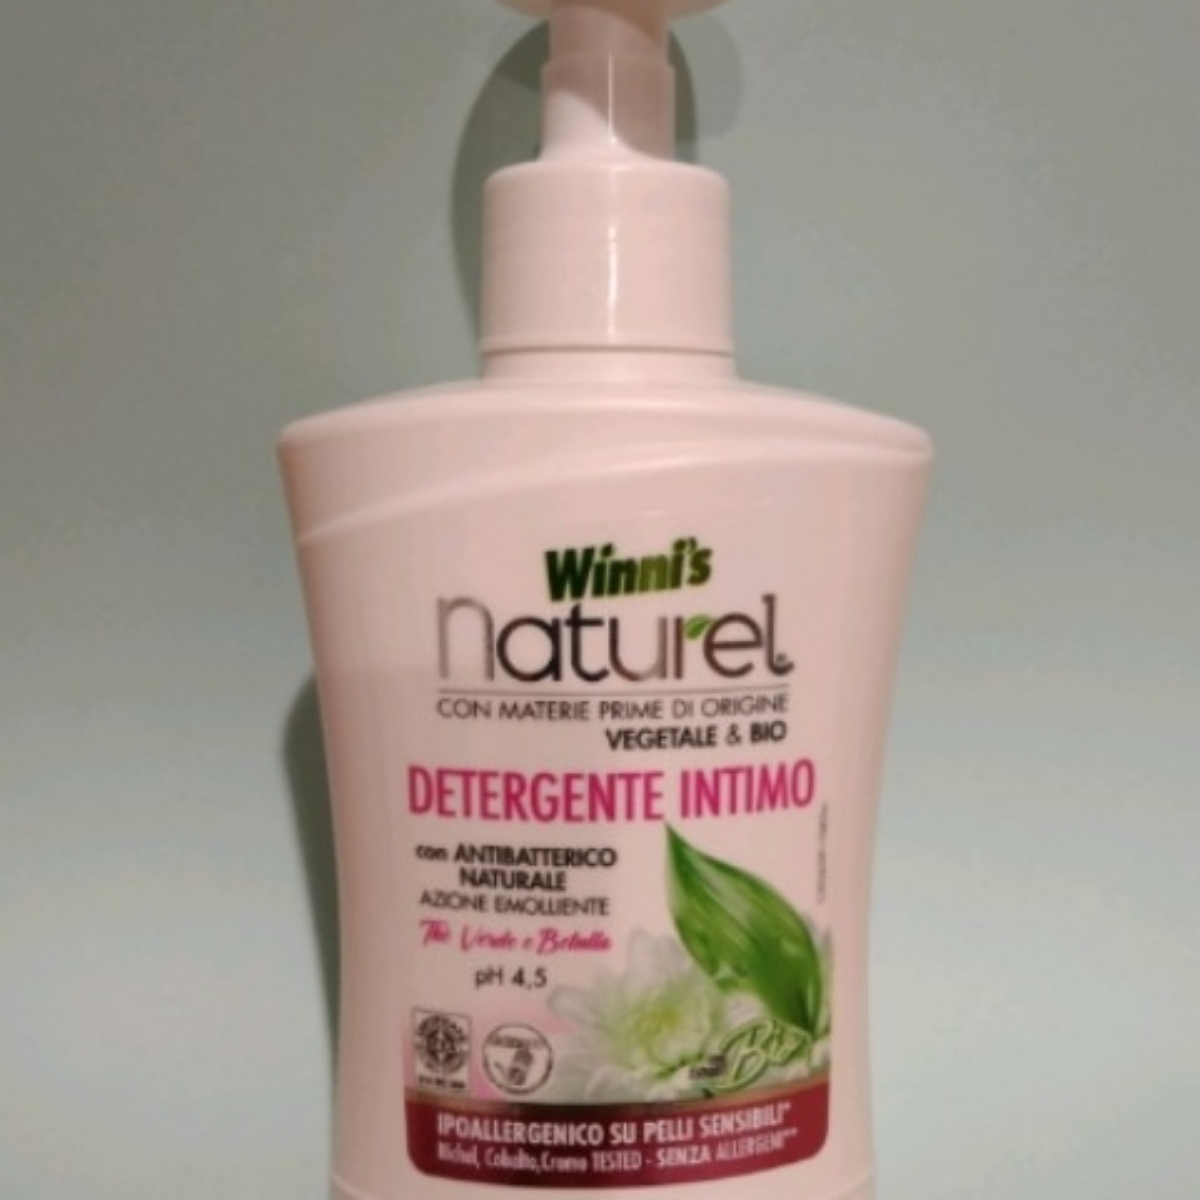 Winni's Detergente Intimo Reviews | abillion